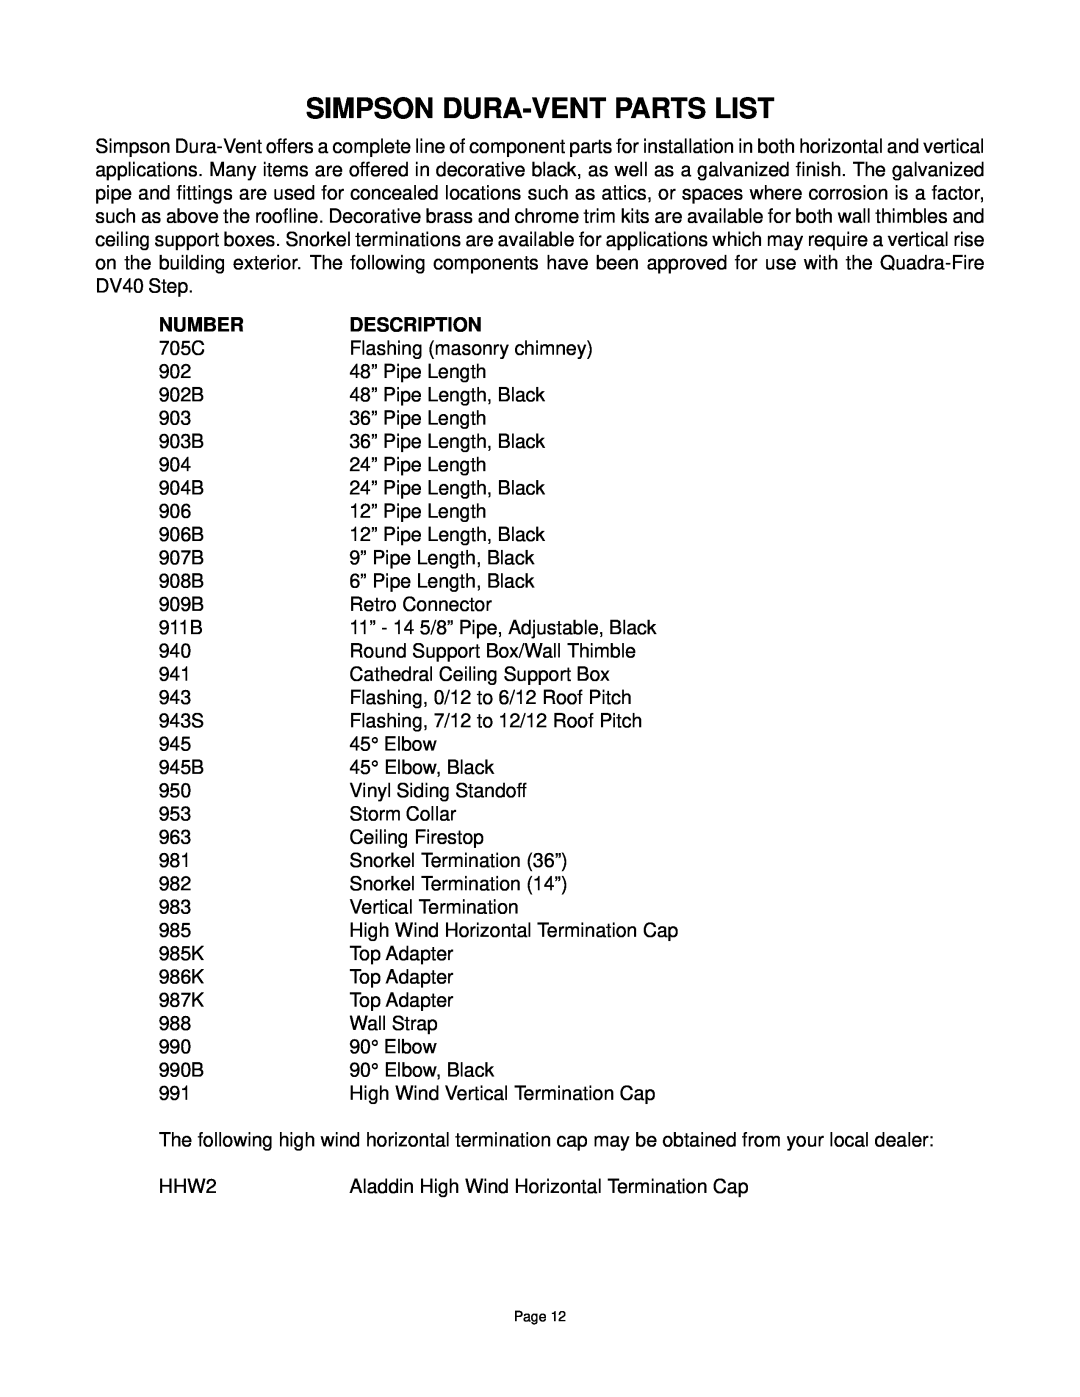 Quadra-Fire DV-40 manual Simpson Dura-Ventparts List, Number, Description 